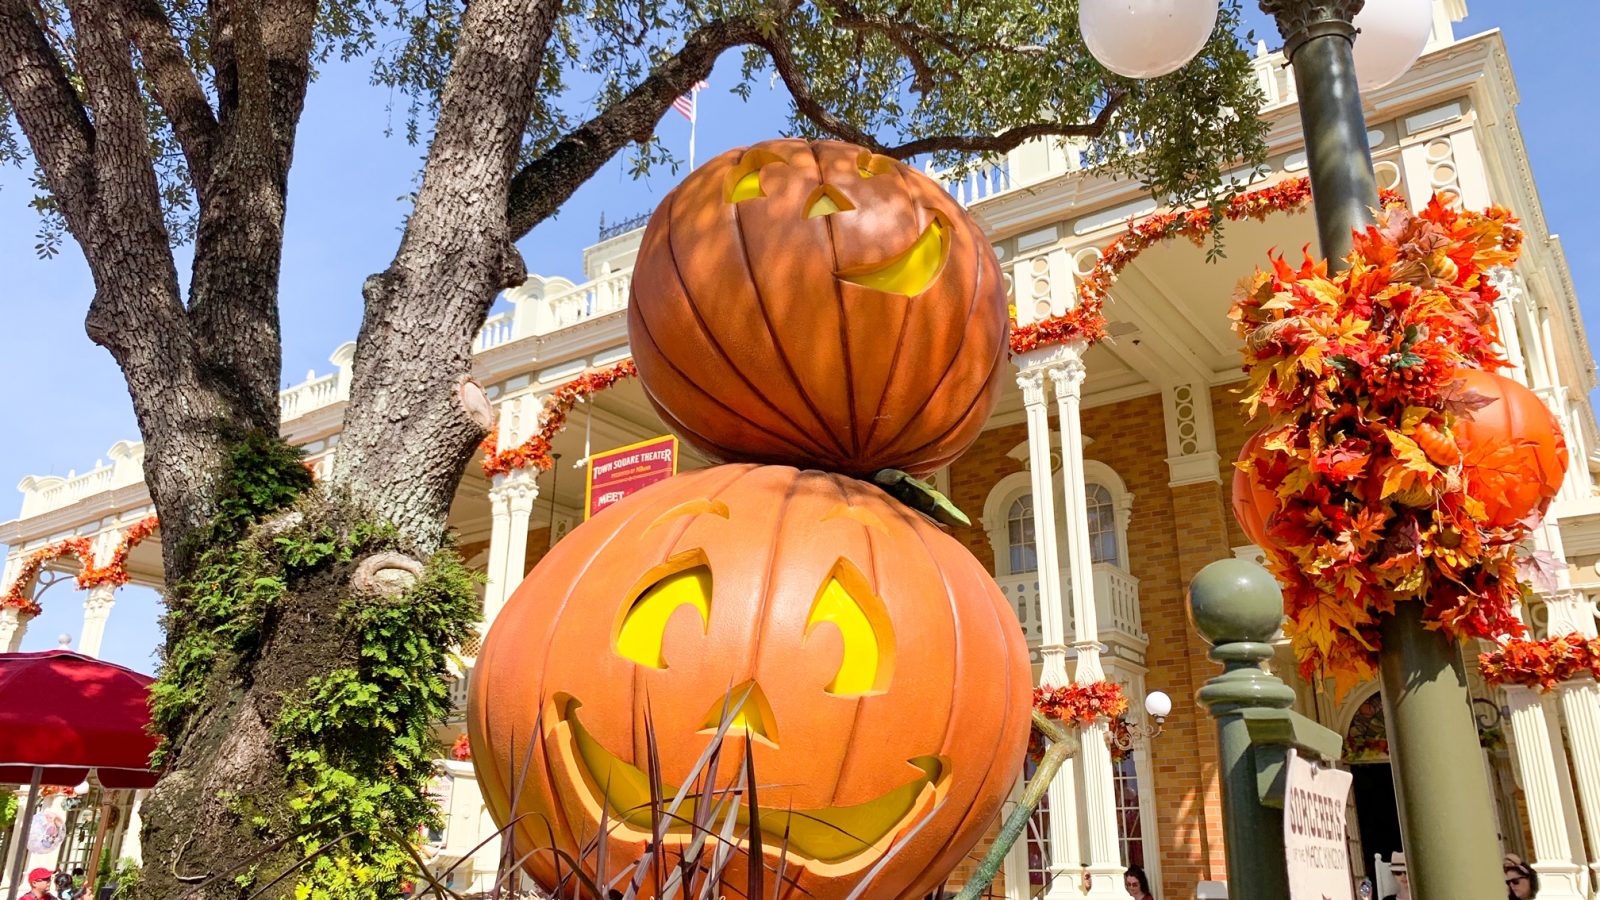 pumpkin decorations outside town square theater in magic kingdom